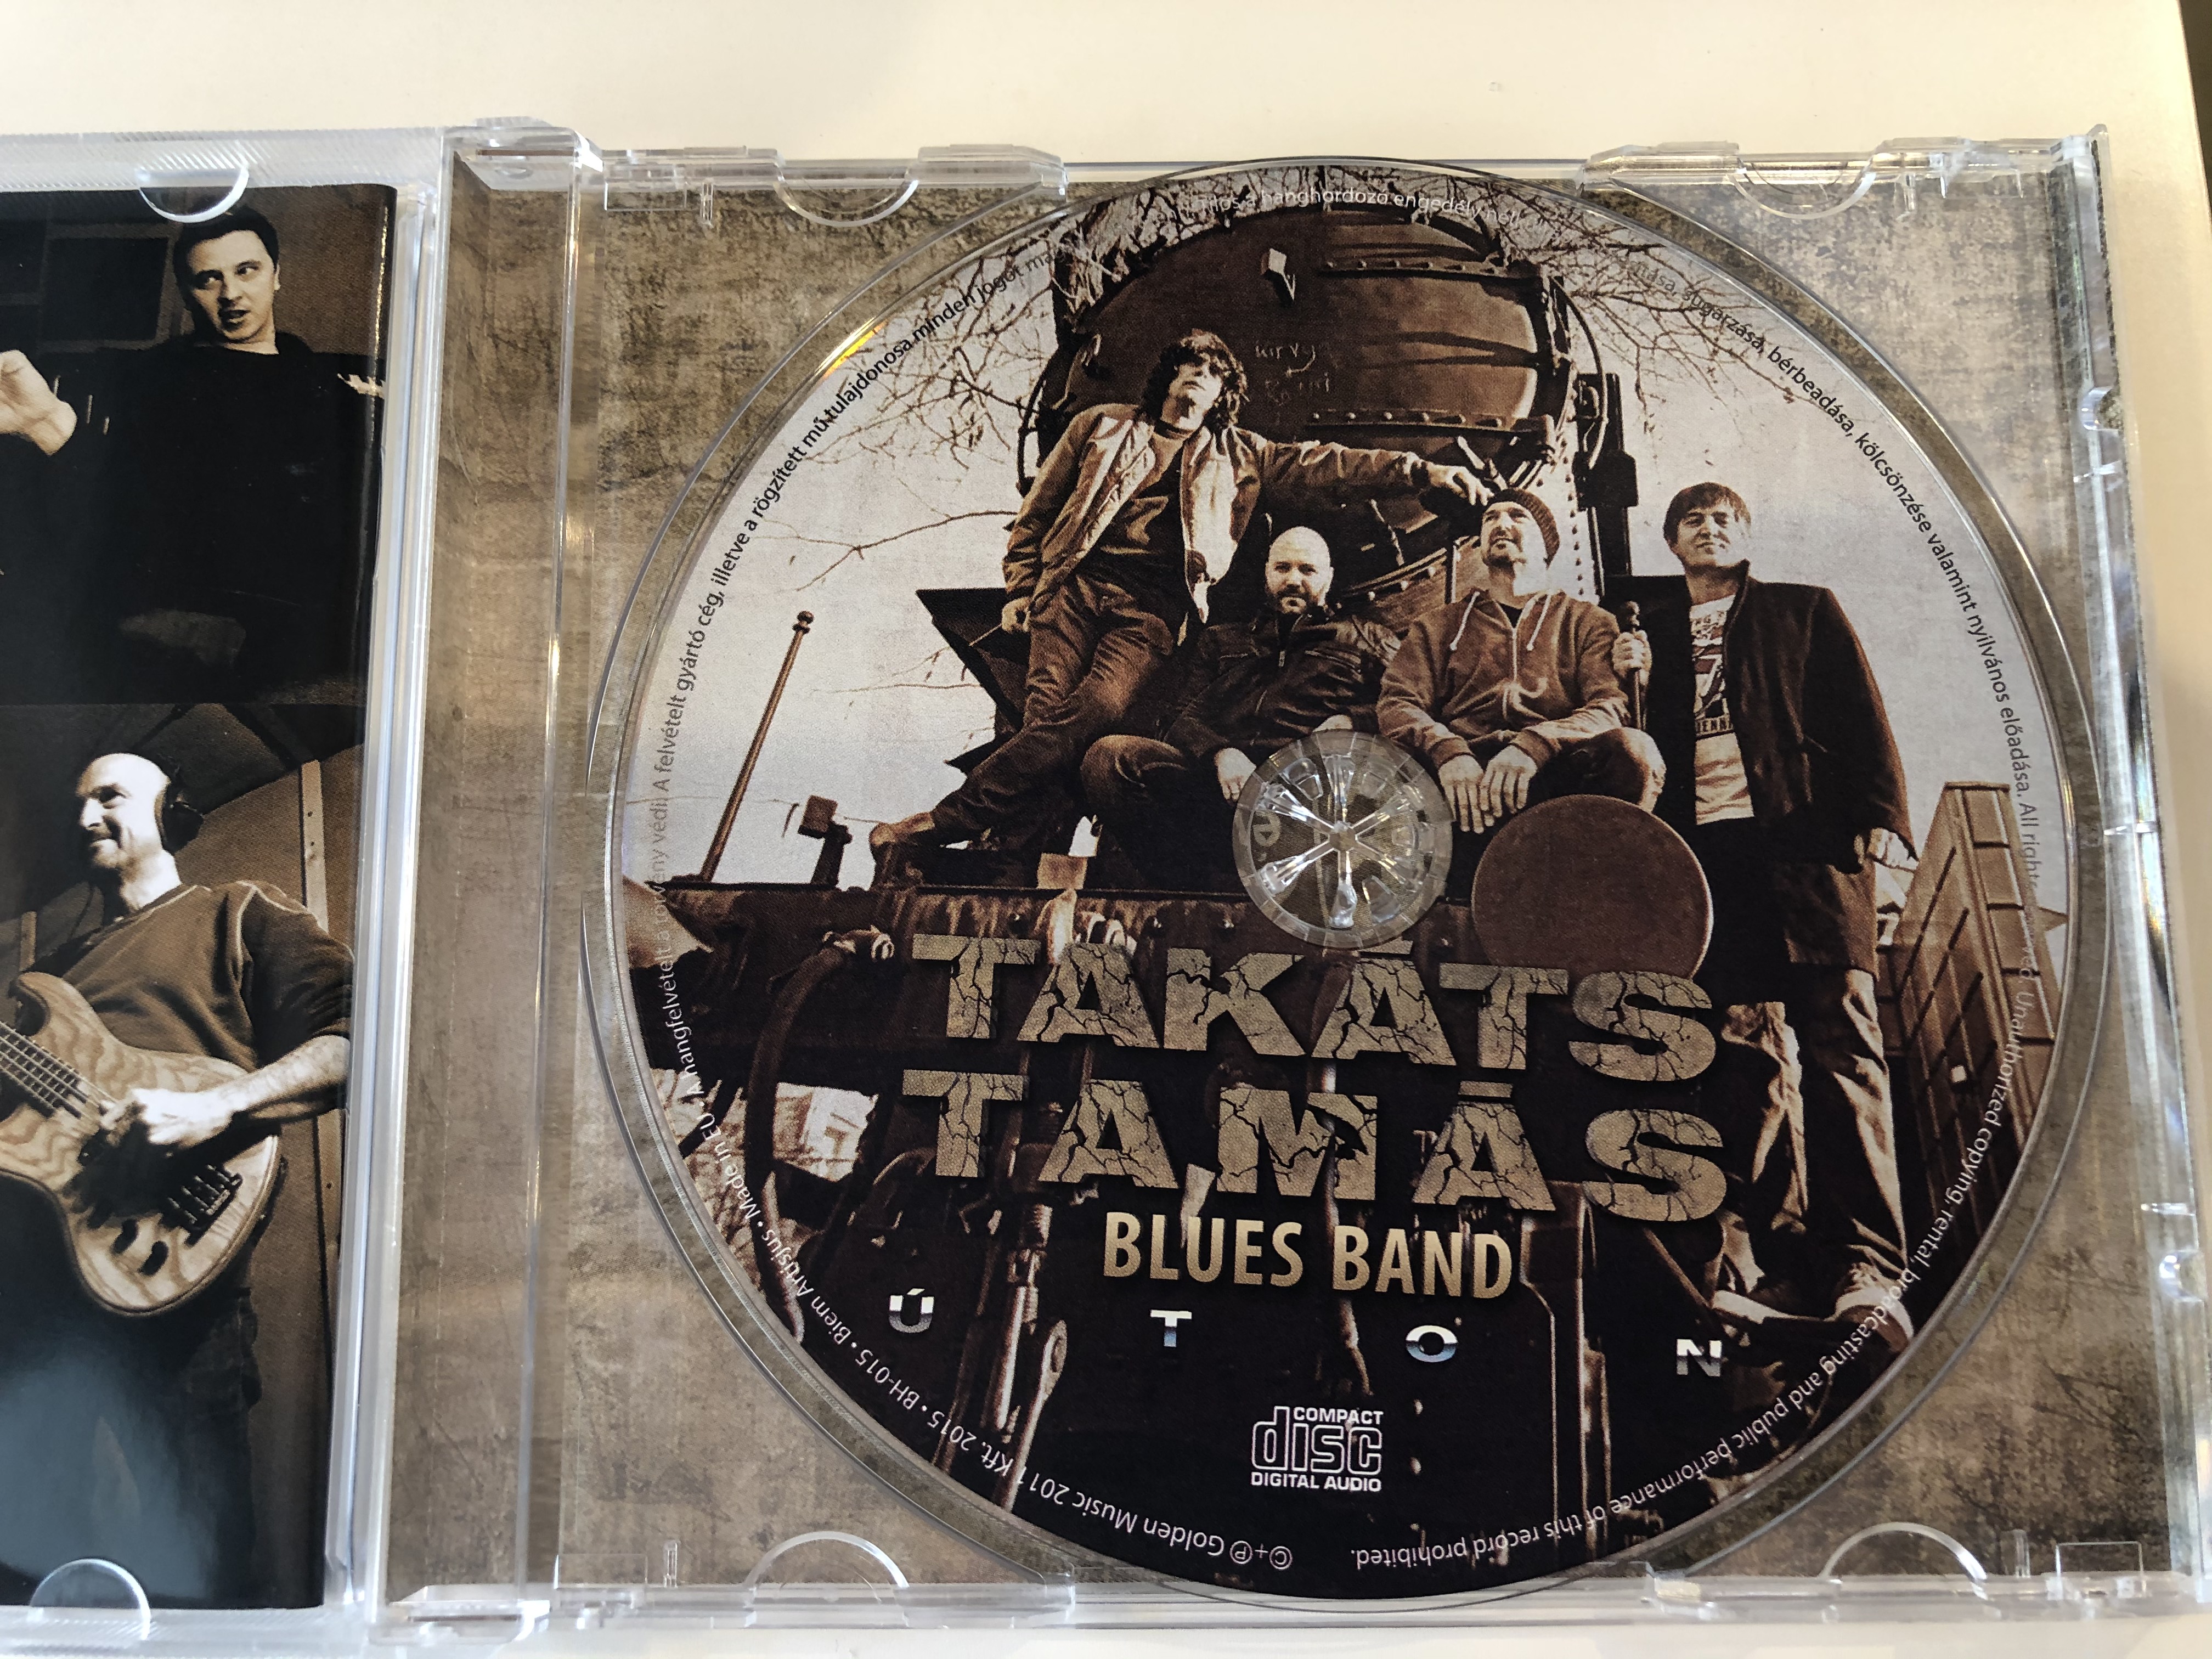 tak-ts-tam-s-blues-band-uton-golden-music-2011-kft.-2015-audio-cd-bh-015-3-.jpg